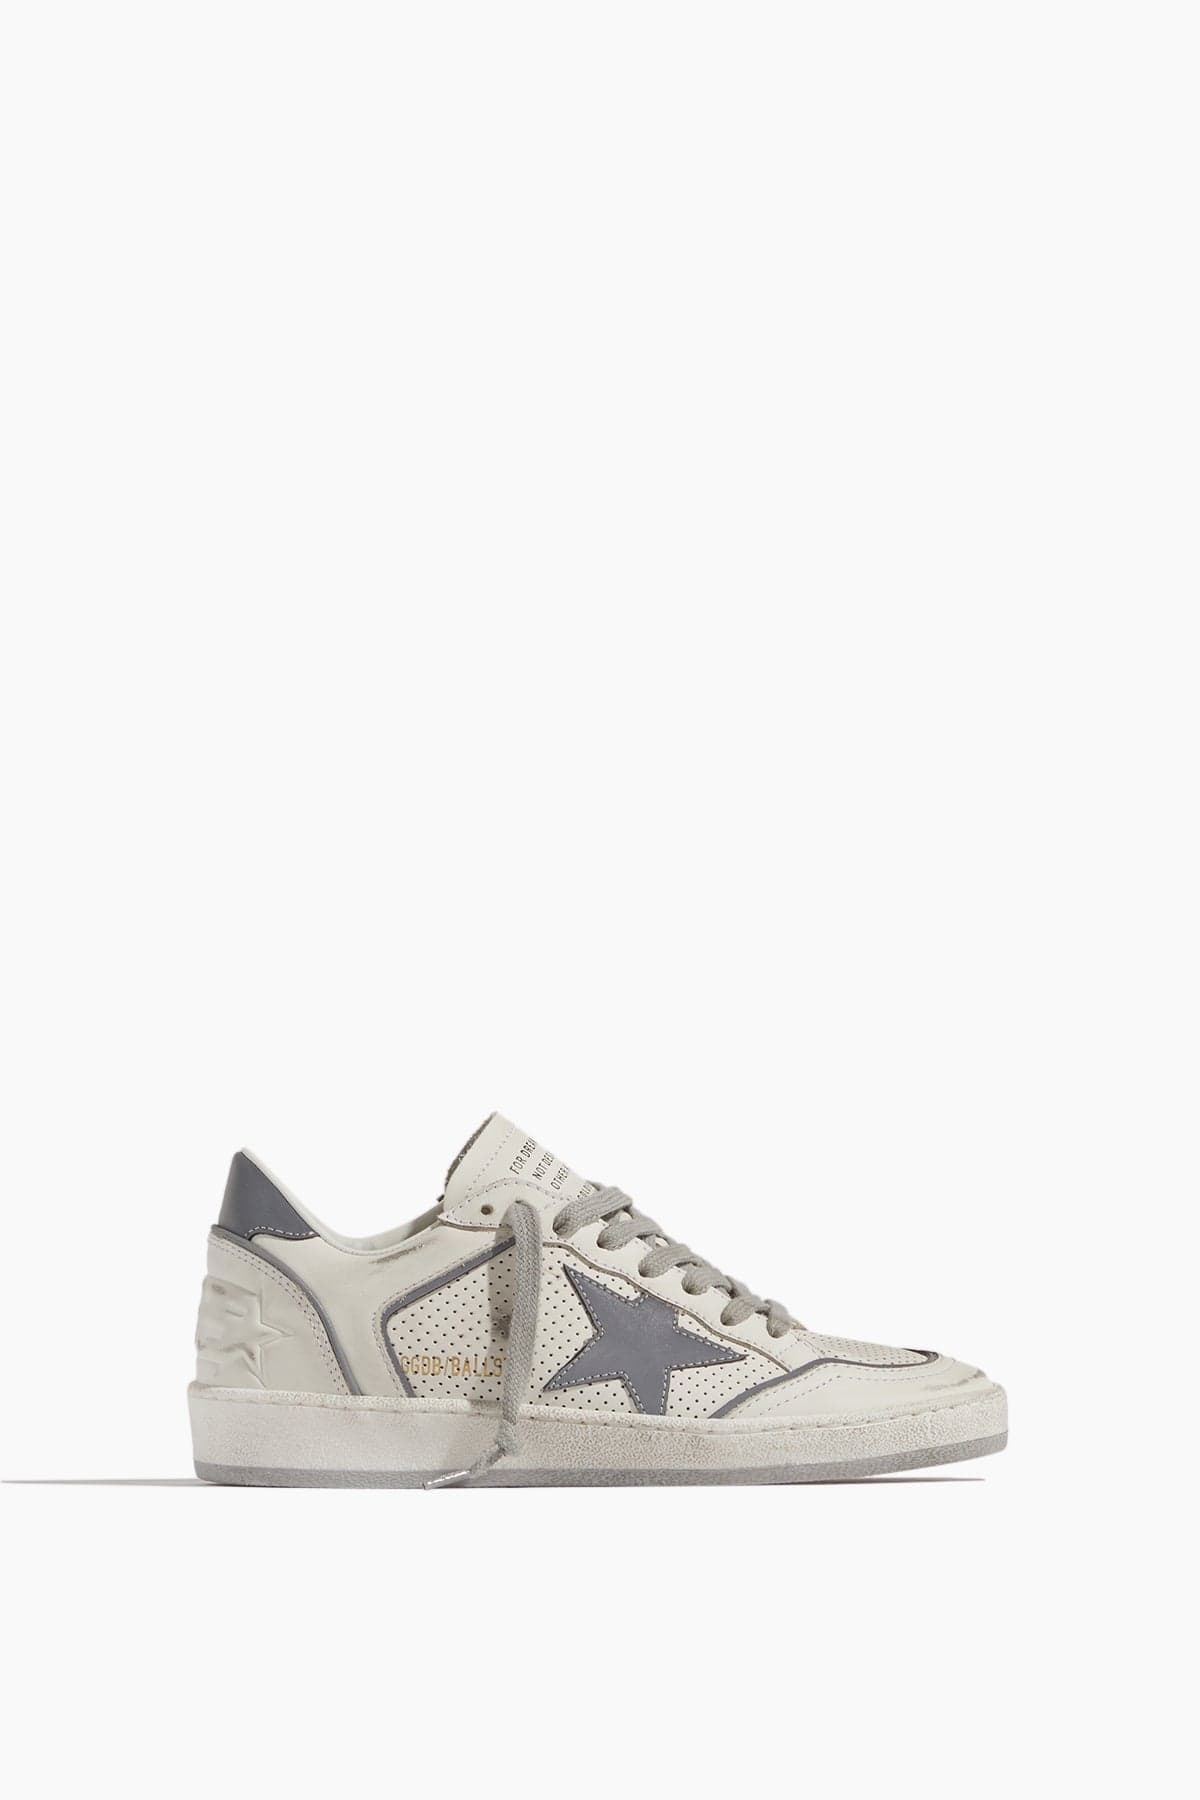 Ball Star Sneaker in White/Silver - 1